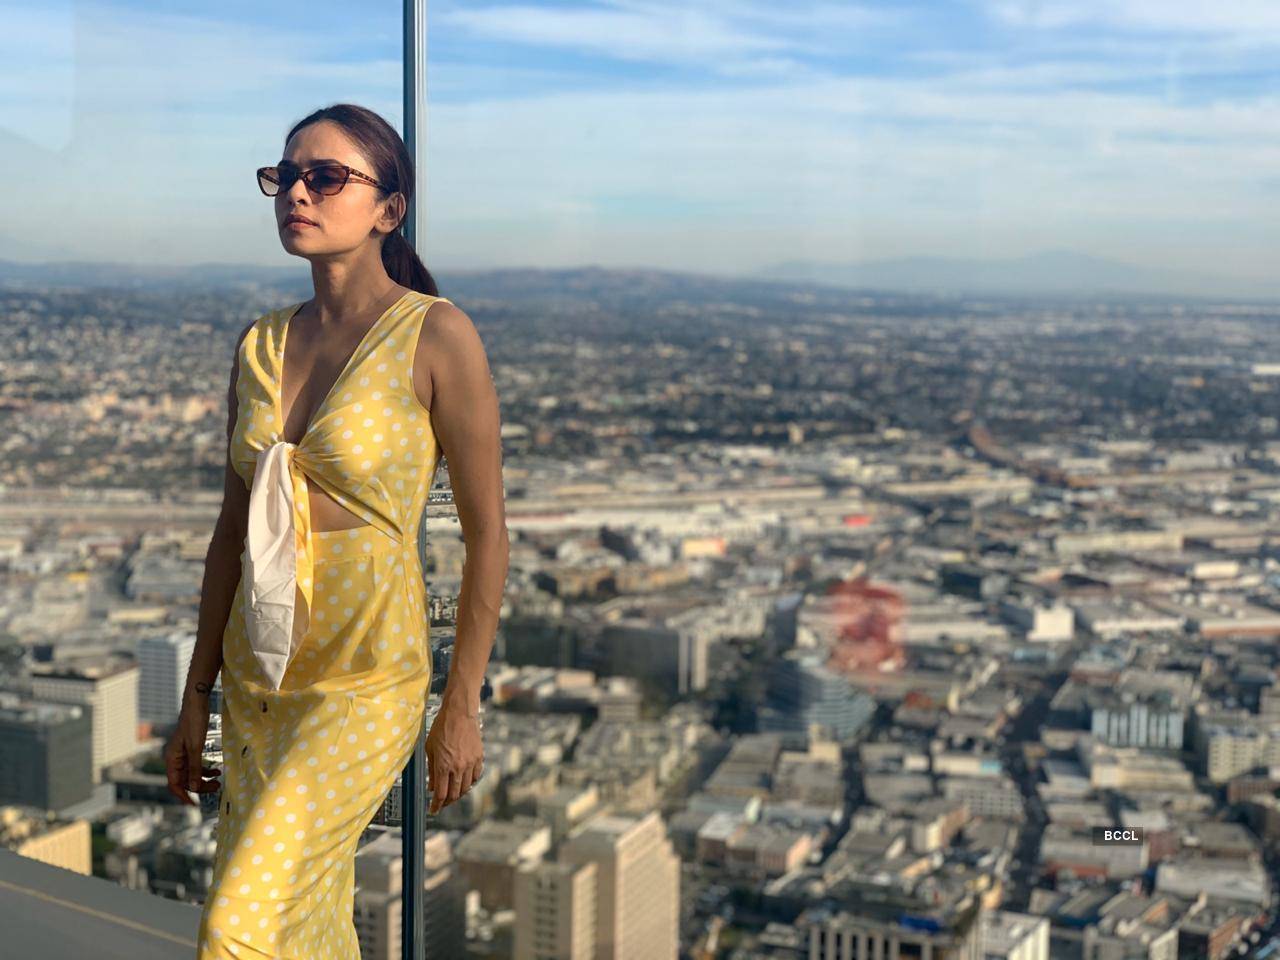 TV actress Amruta Khanvilkar’s latest pics from her LA holiday giving us pure travel goals